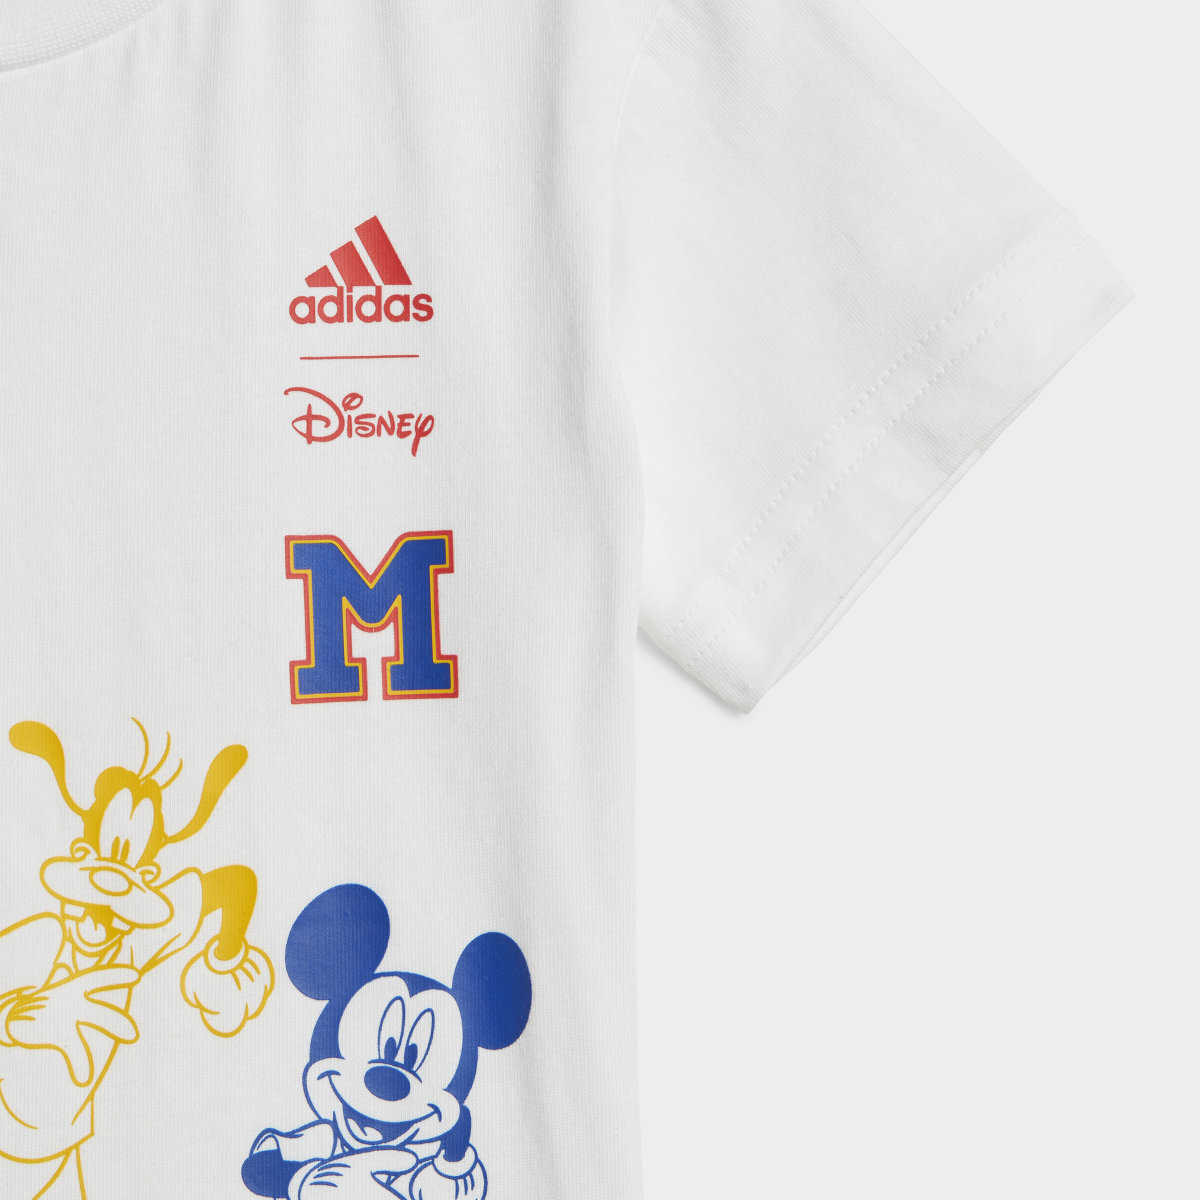 Adidas x Disney Mickey Mouse Tişört ve Şort Takımı. 7